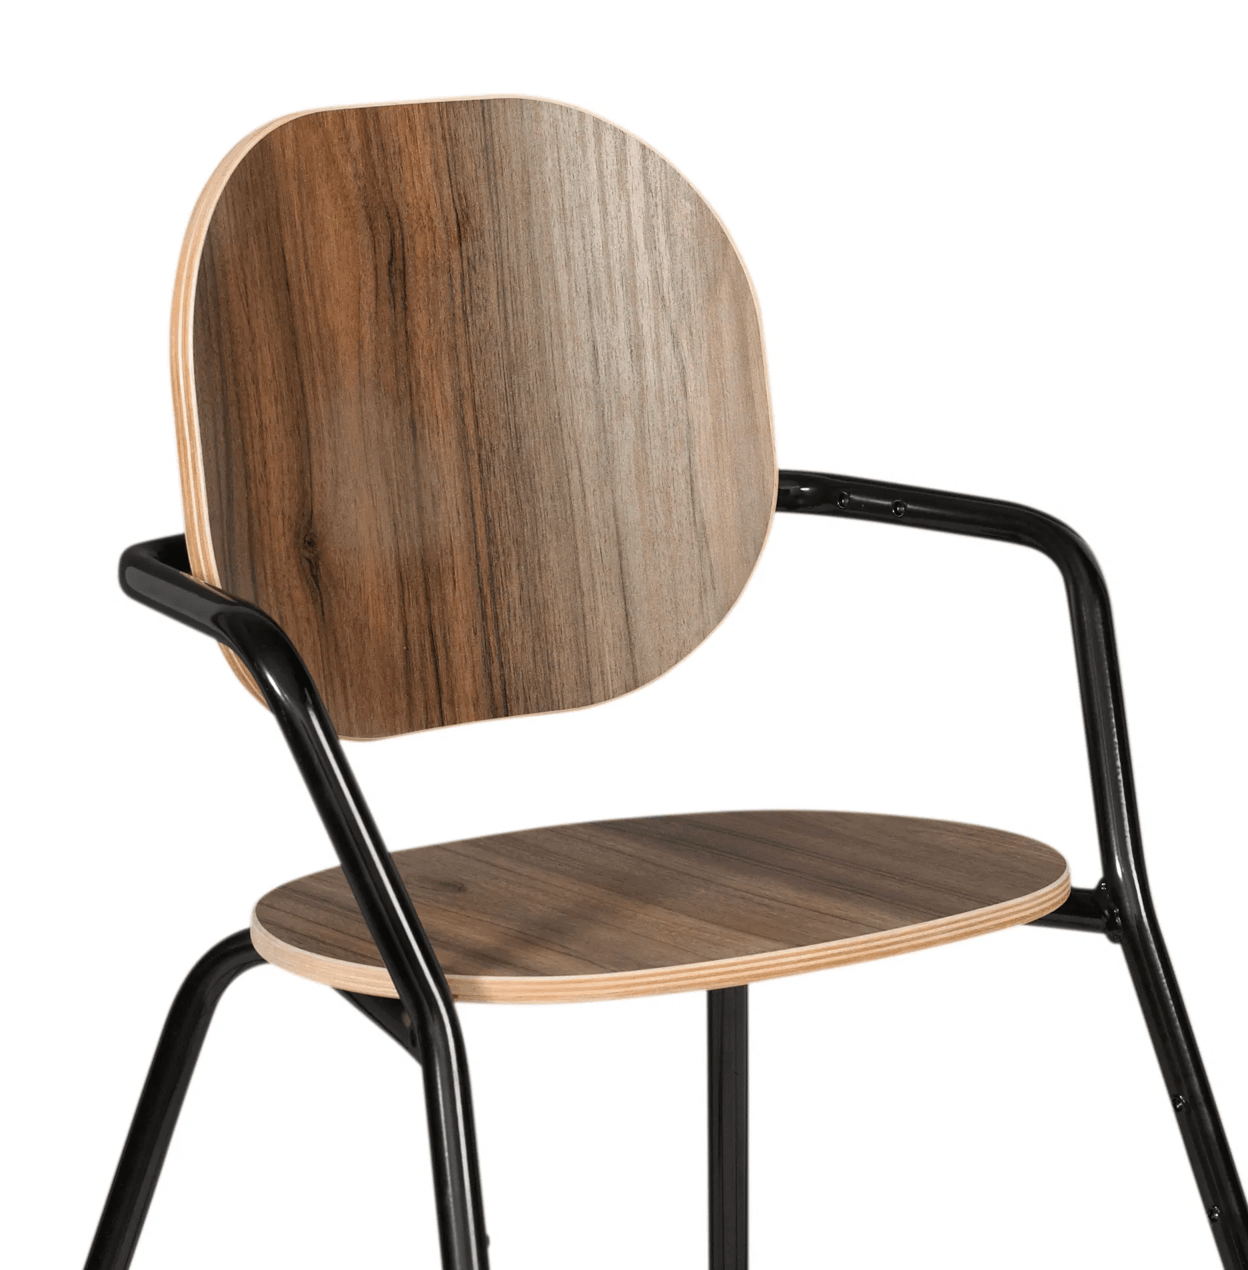 Charlie Crane TIBU High Chair, en del av kategorien Furniture - At Home Interiør